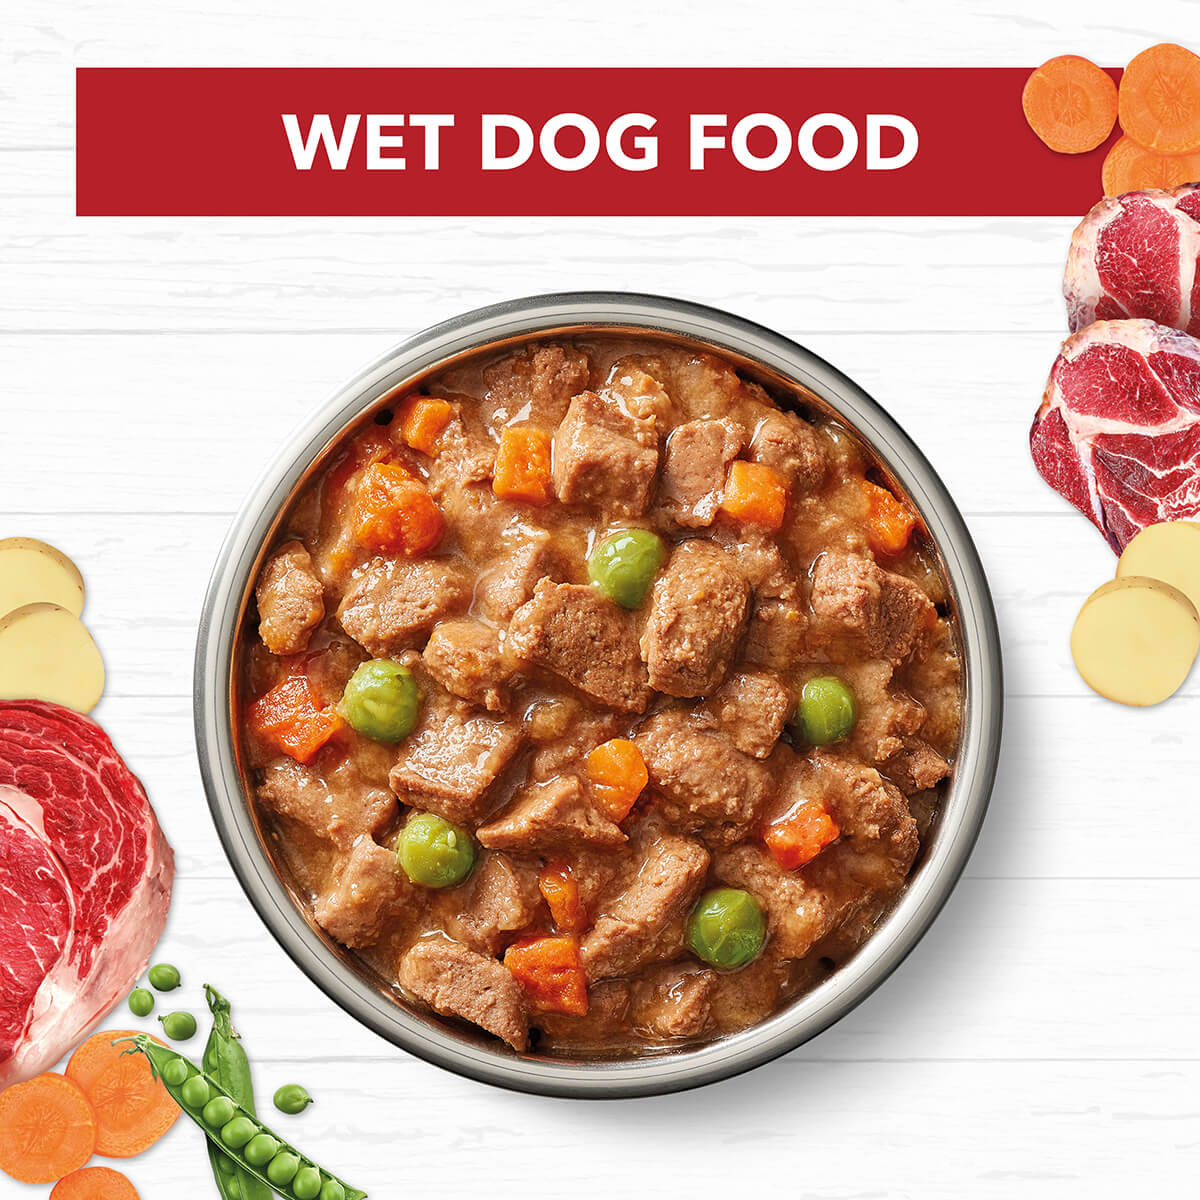 Ivory Coat Grain Free Adult Wet Dog Food Beef Stew 400g